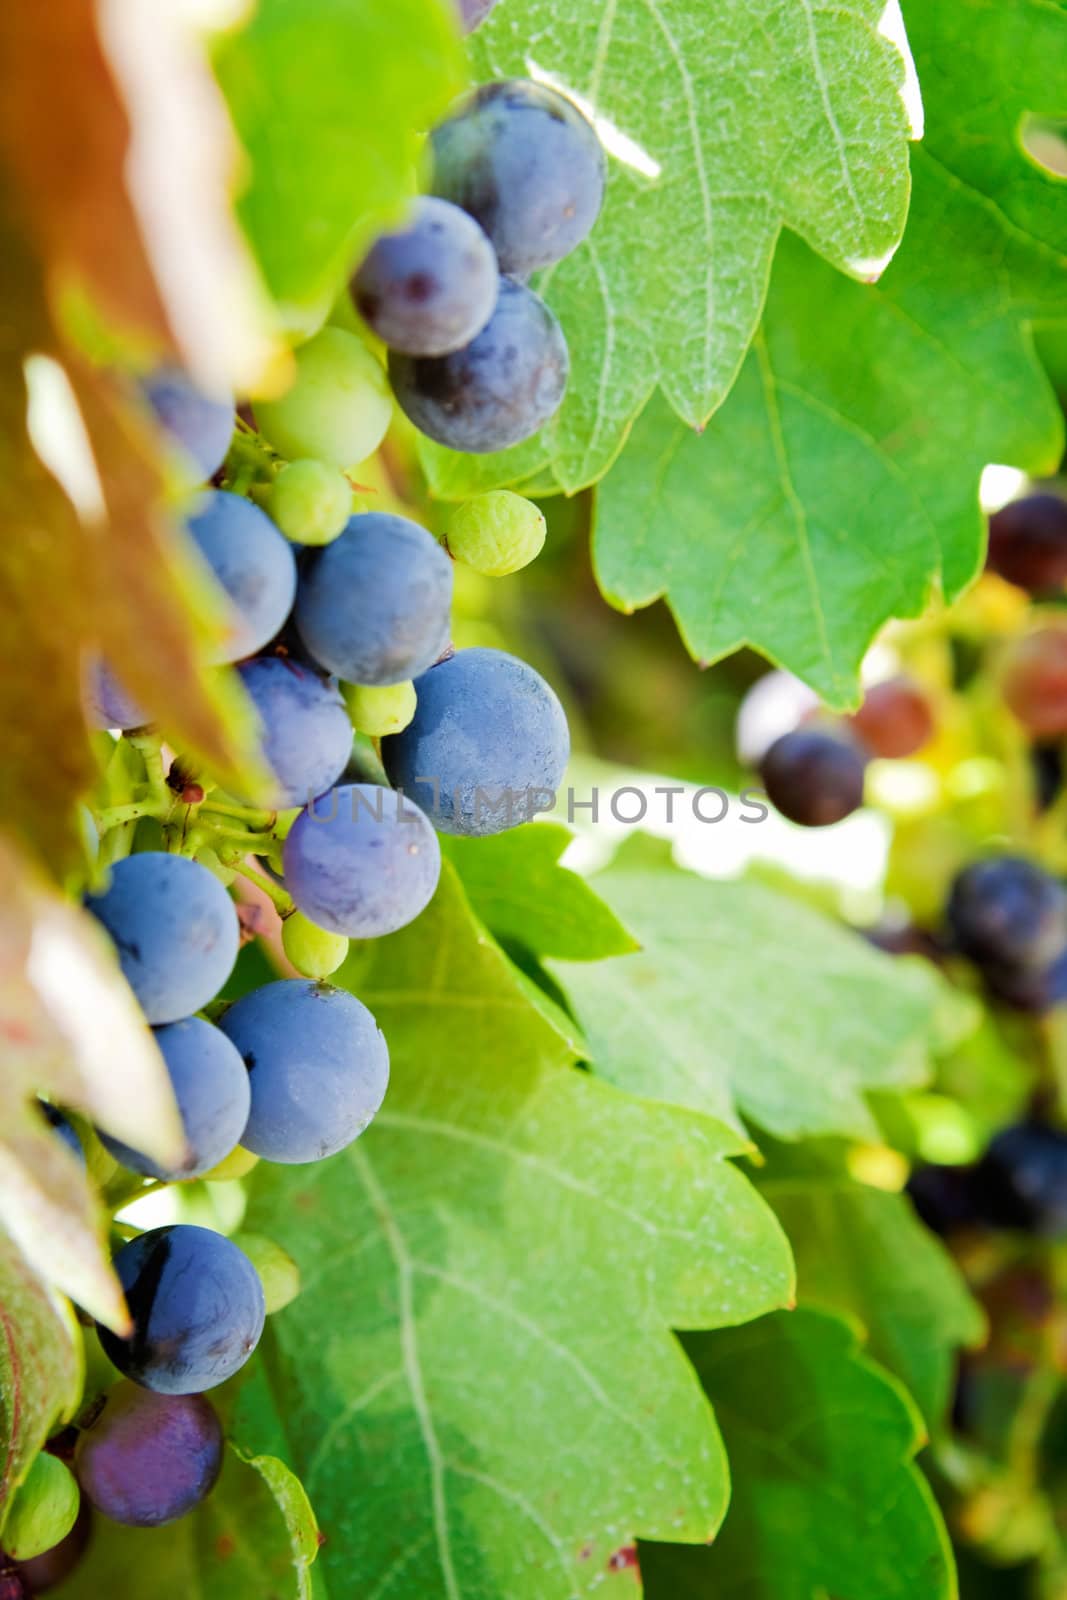 Bunch of grapes by carloscastilla